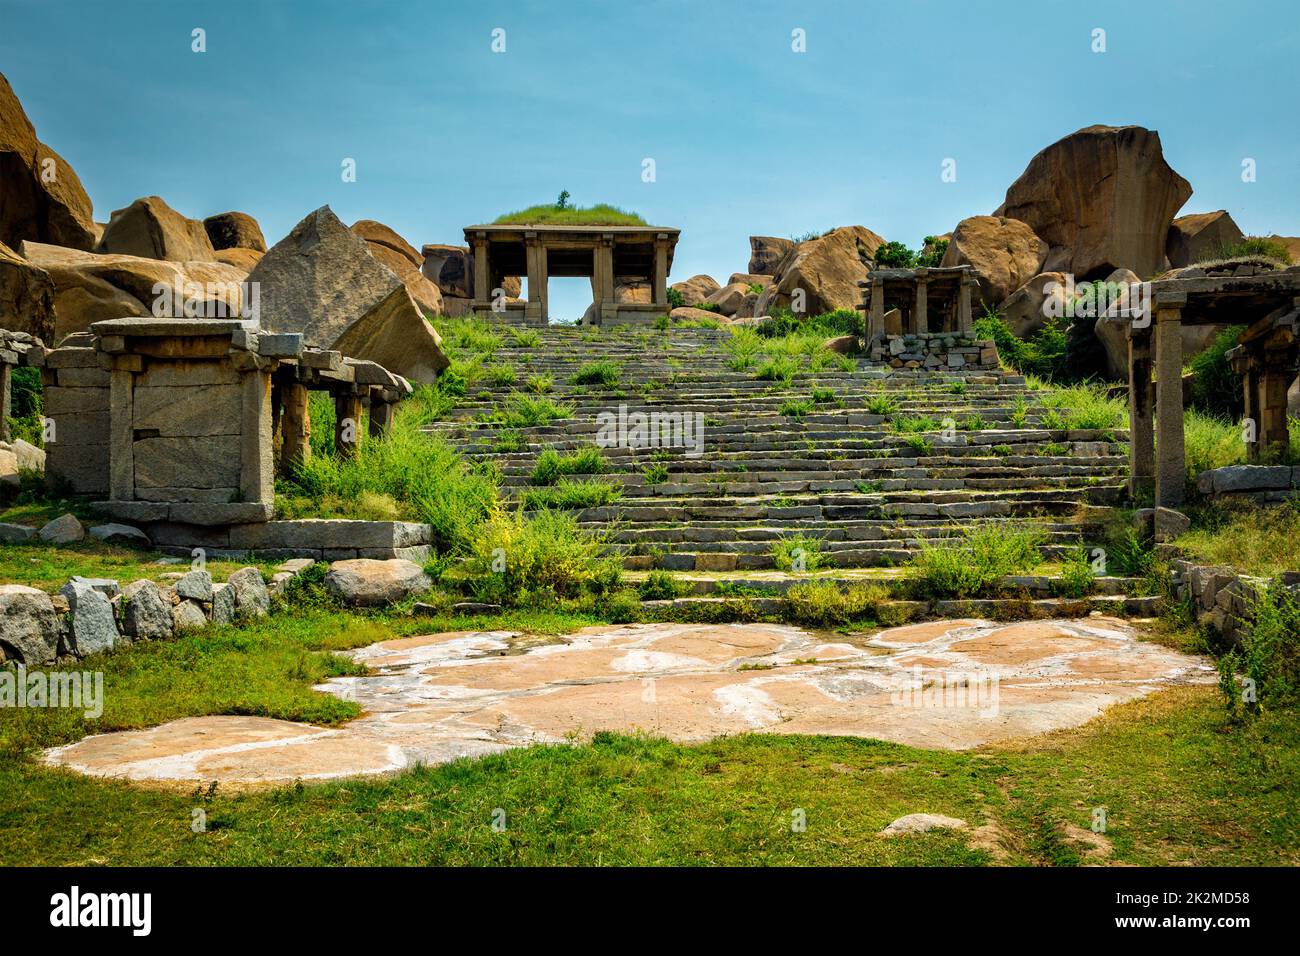 Ruines anciennes à Hampi, Inde Banque D'Images